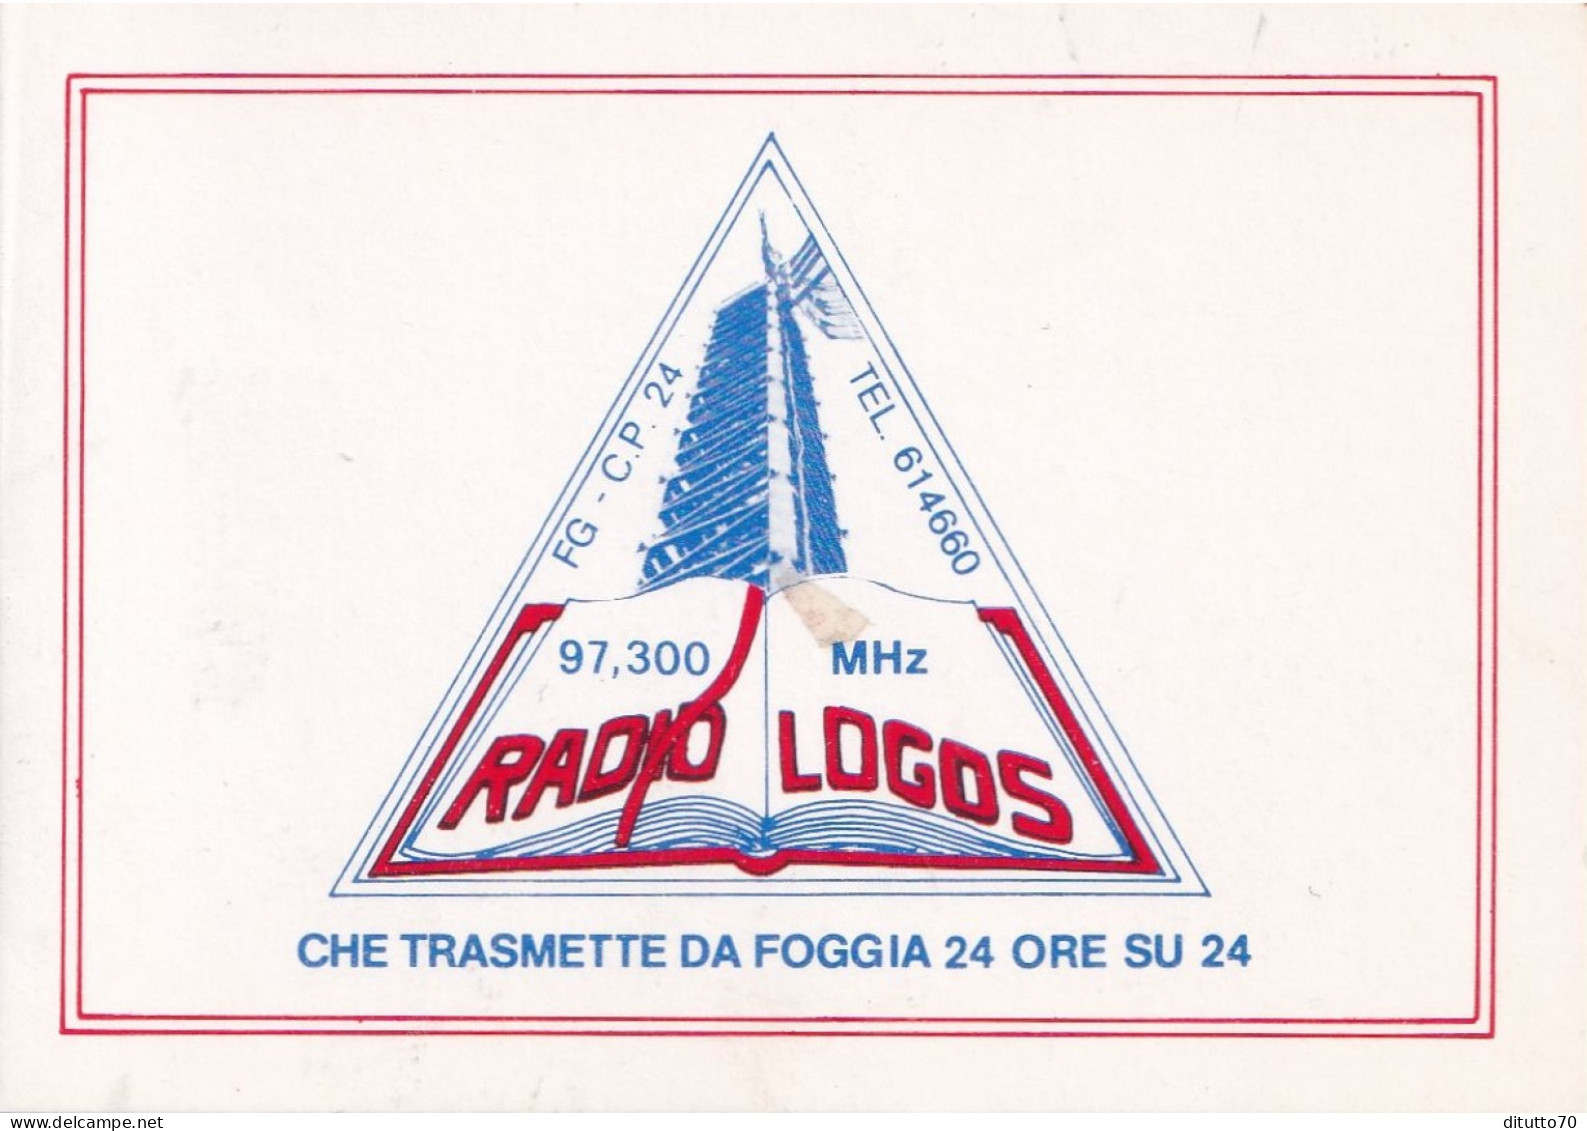 Calendarietto - RADIO LOGOS - Foggia - Anno 1990 - Klein Formaat: 1981-90